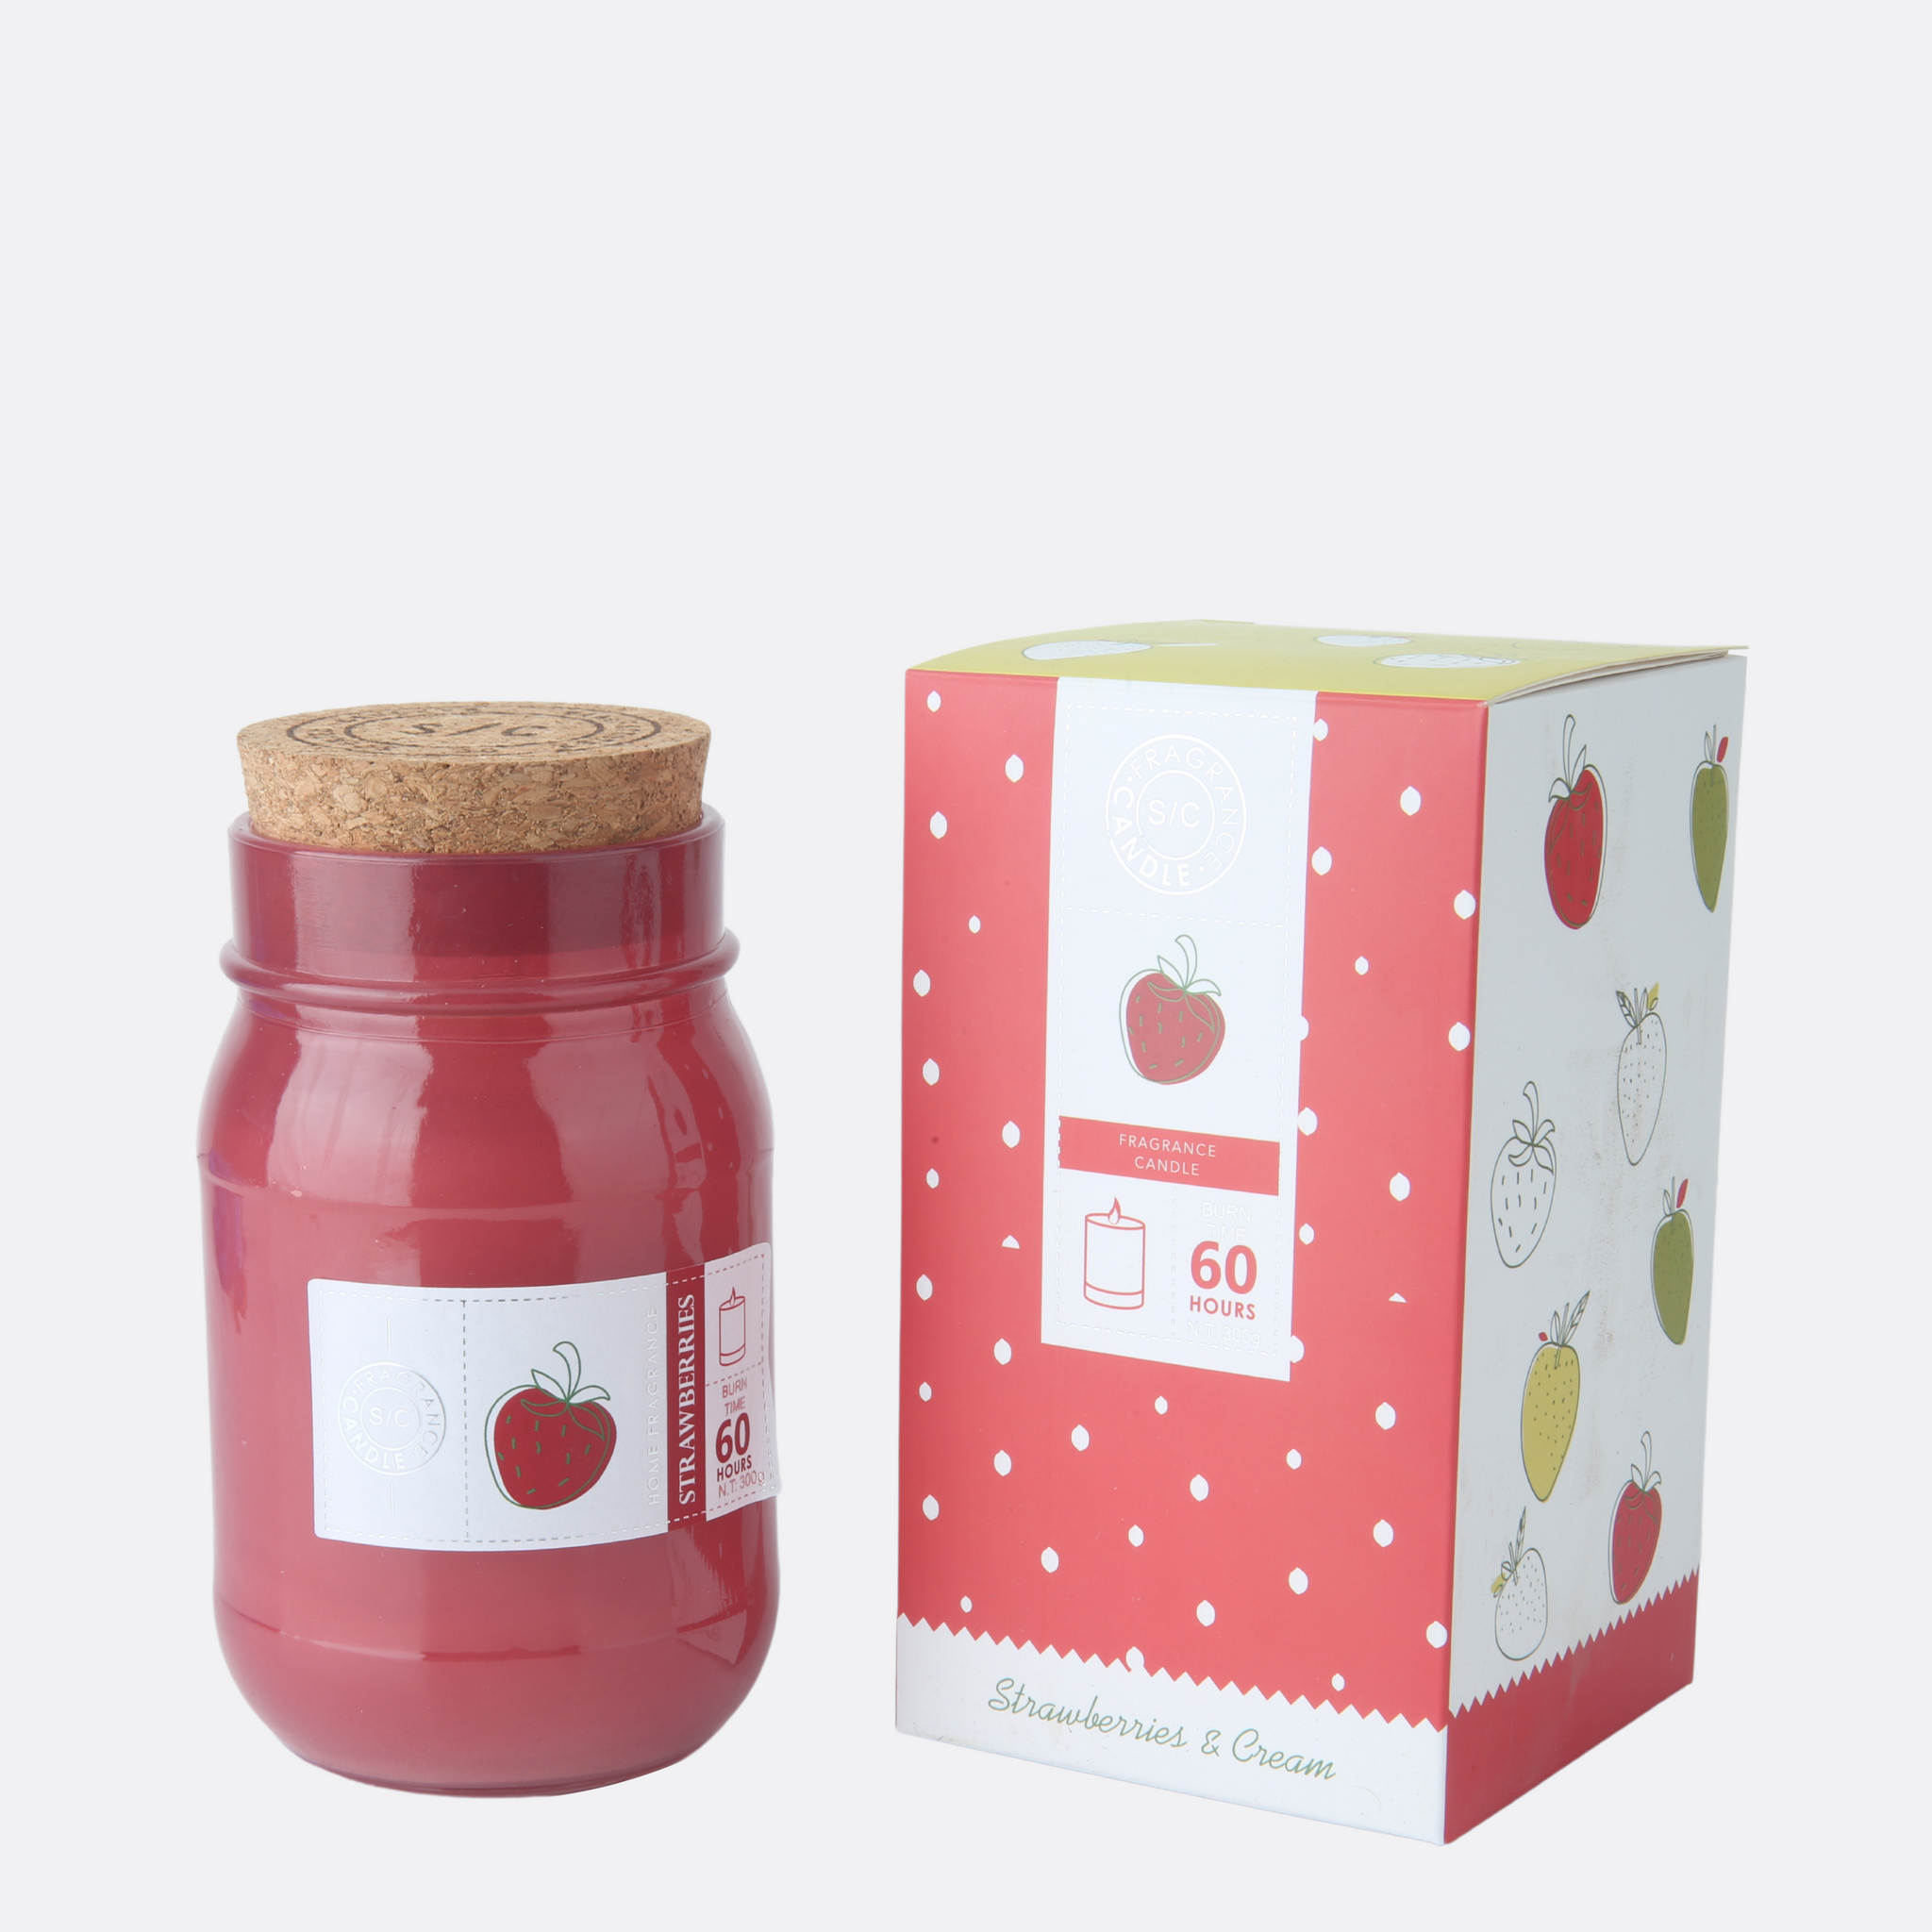 Strawberries Aroma Sensation Jar Candle